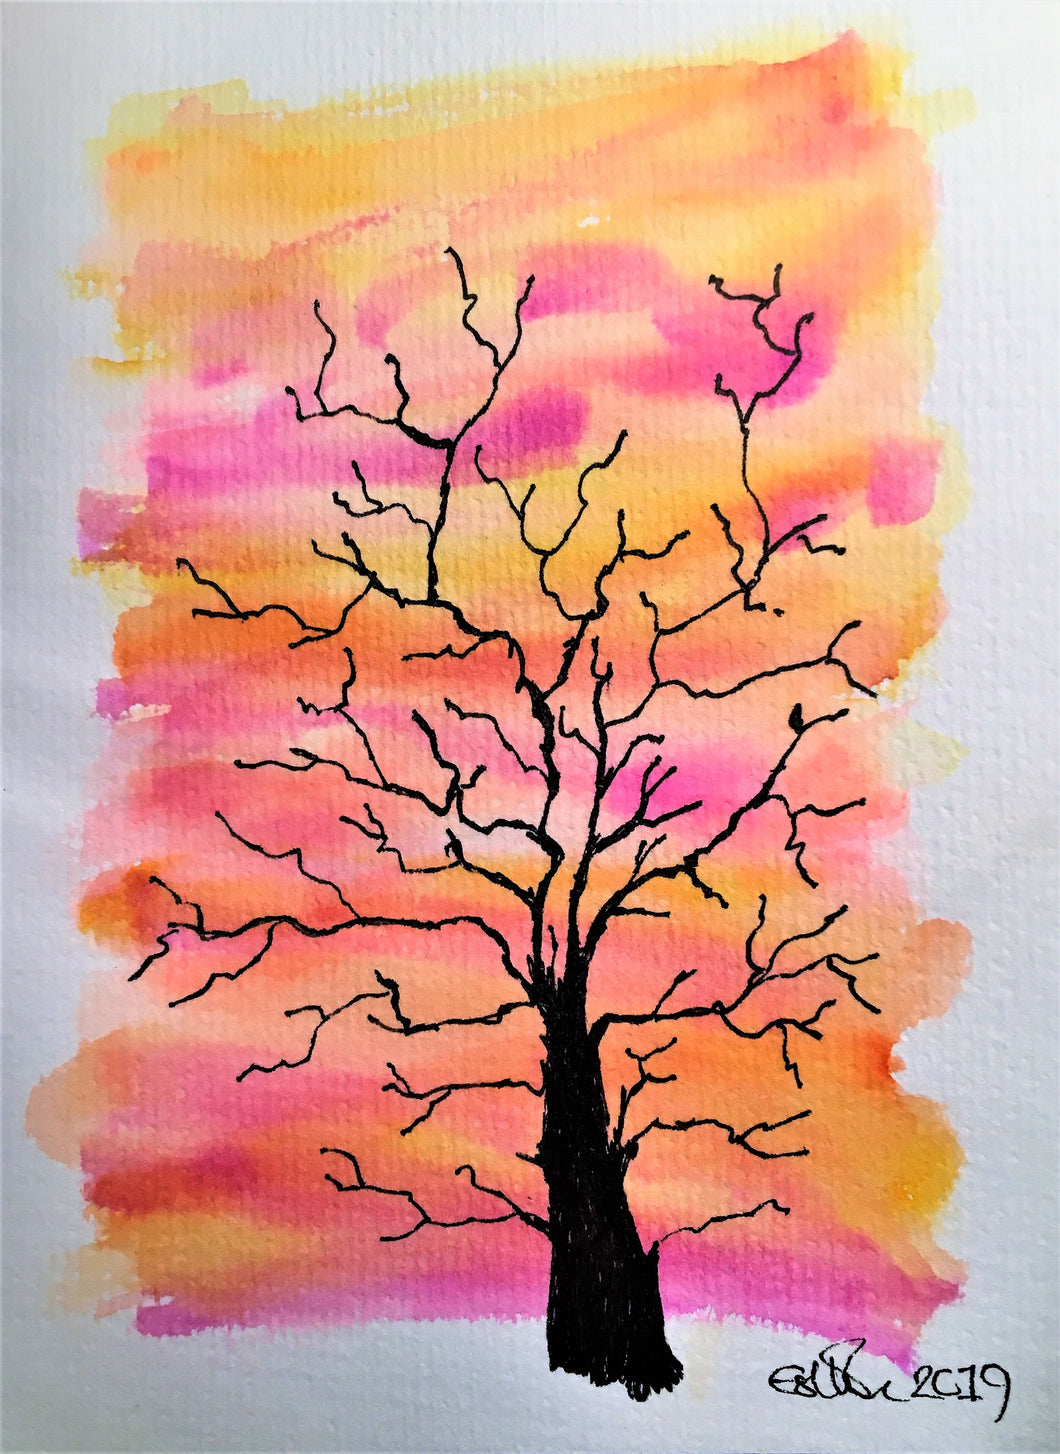 Handpainted Watercolour Greeting Card - Winter Tree at Sunset Pink/Orange - eDgE dEsiGn London